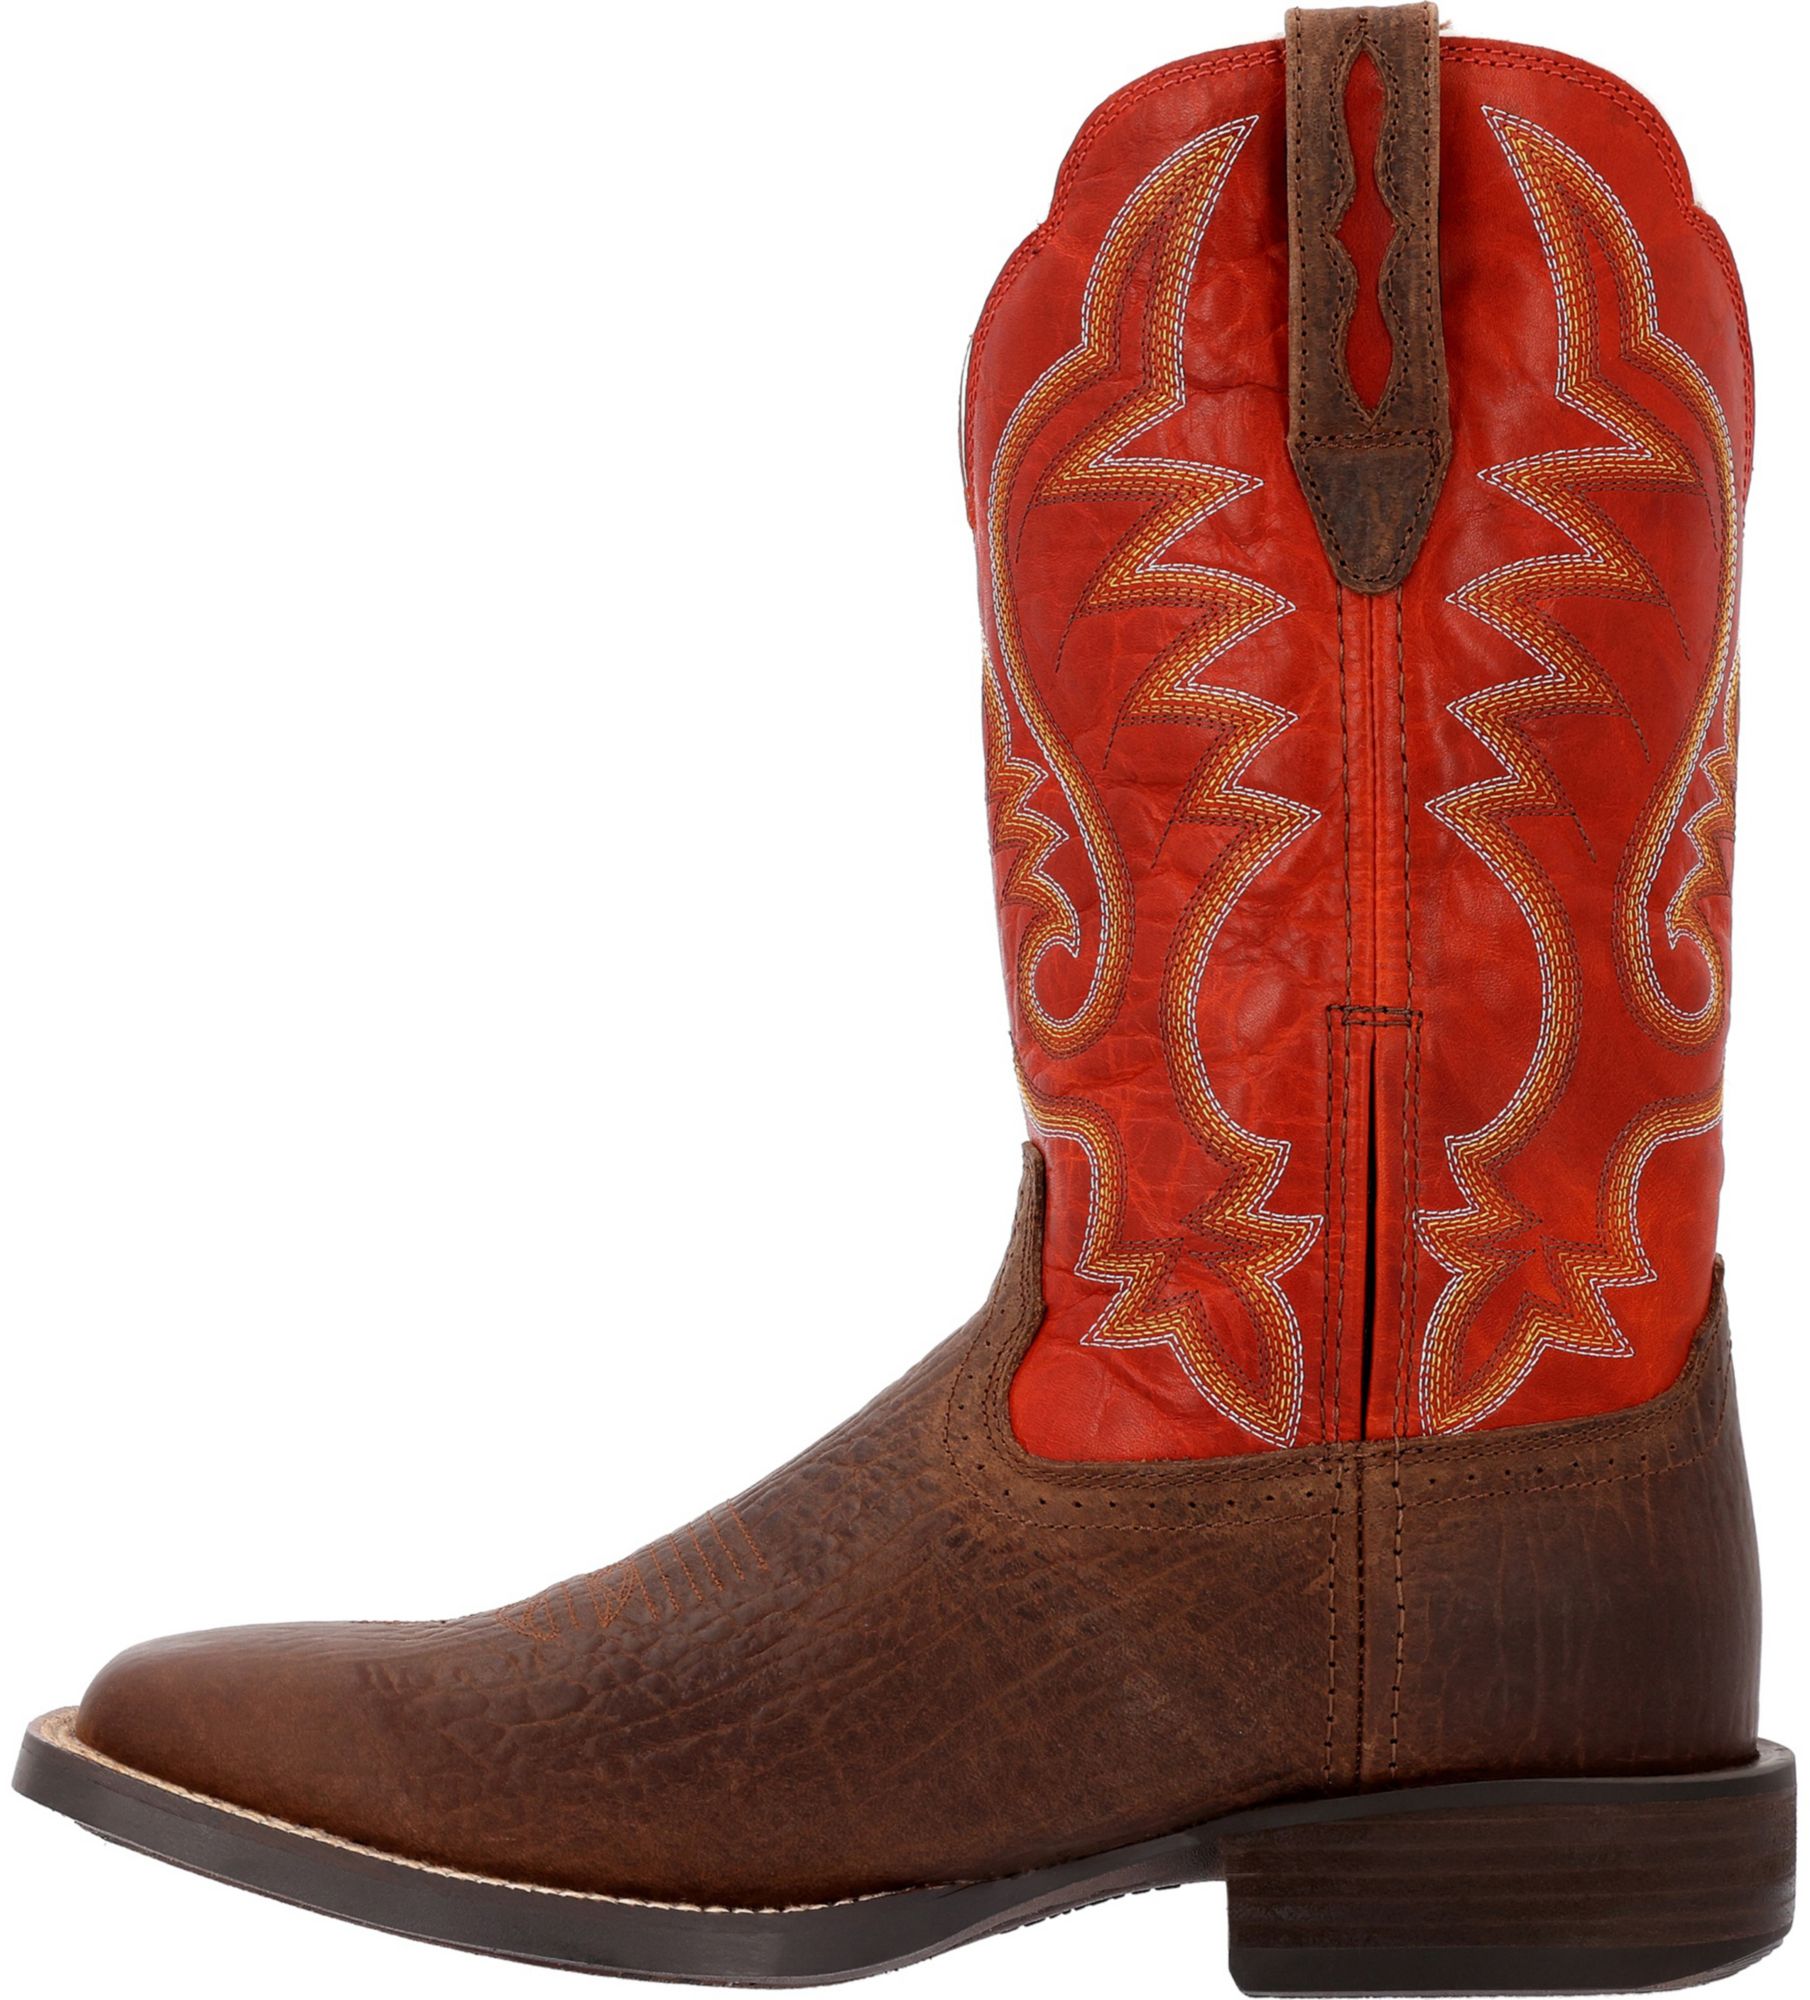 Durango Men's 12" Western Boots